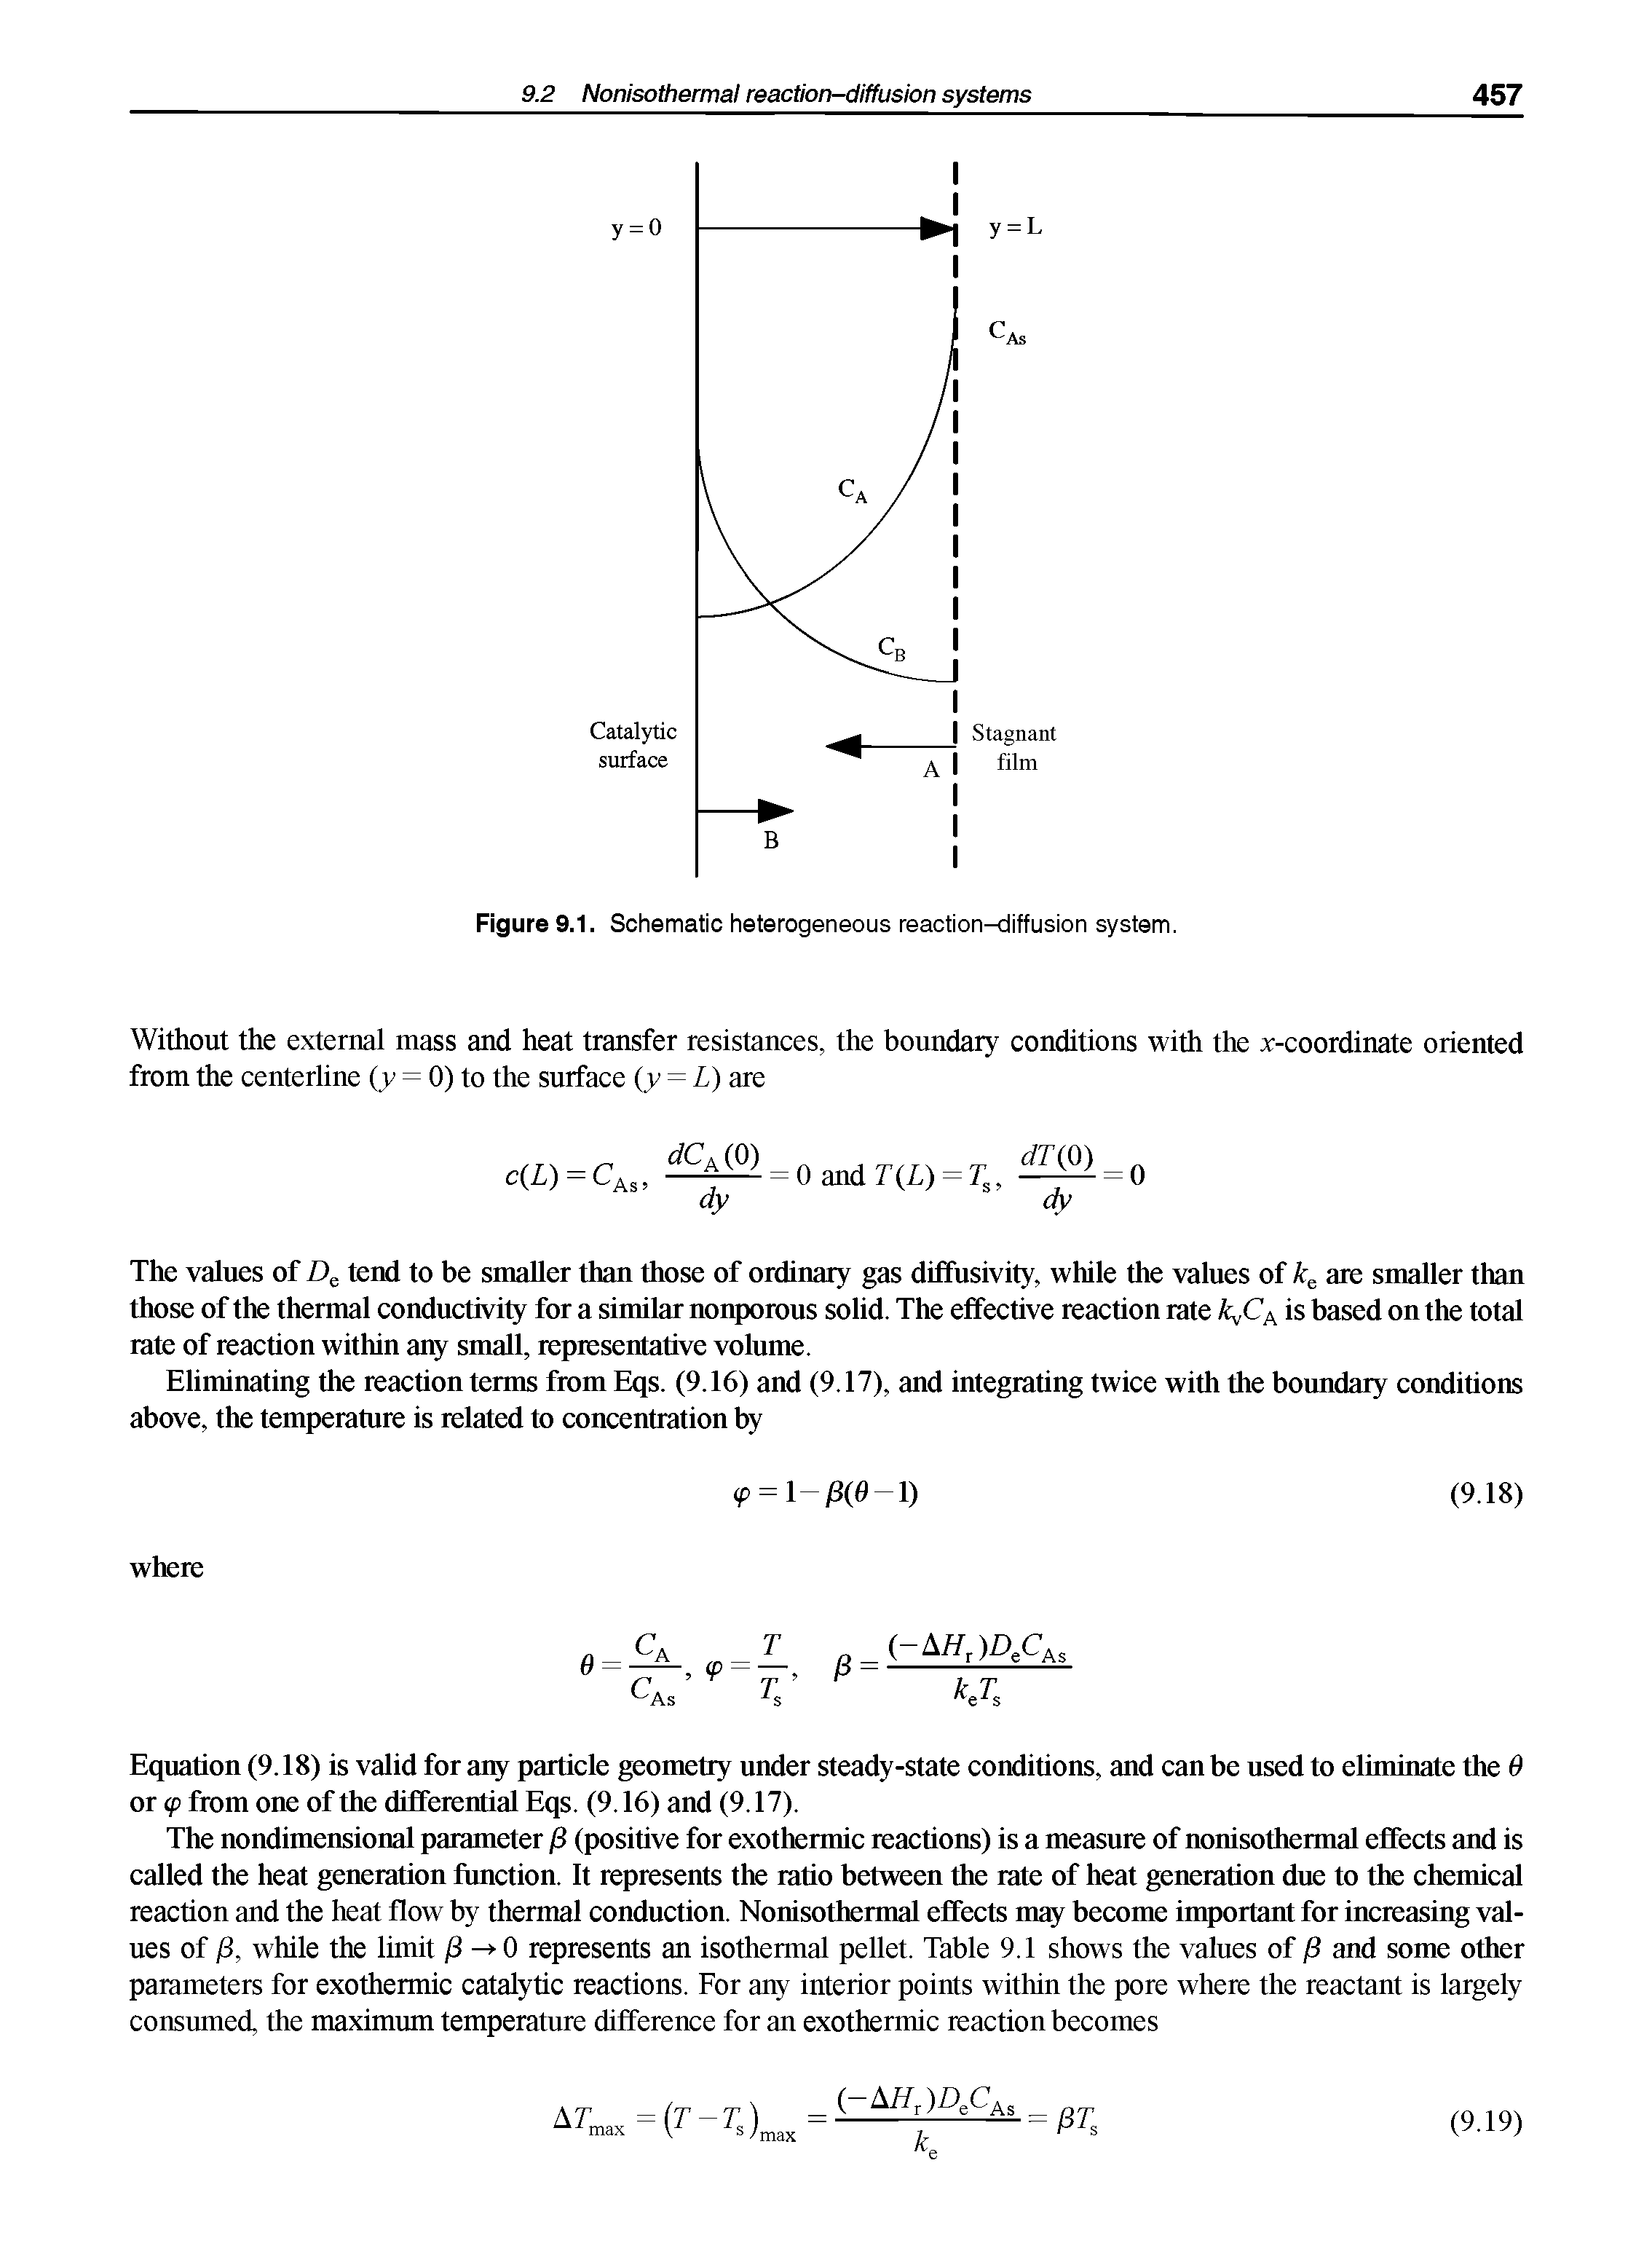 Figure 9.1. Schematic heterogeneous reaction-diffusion system.